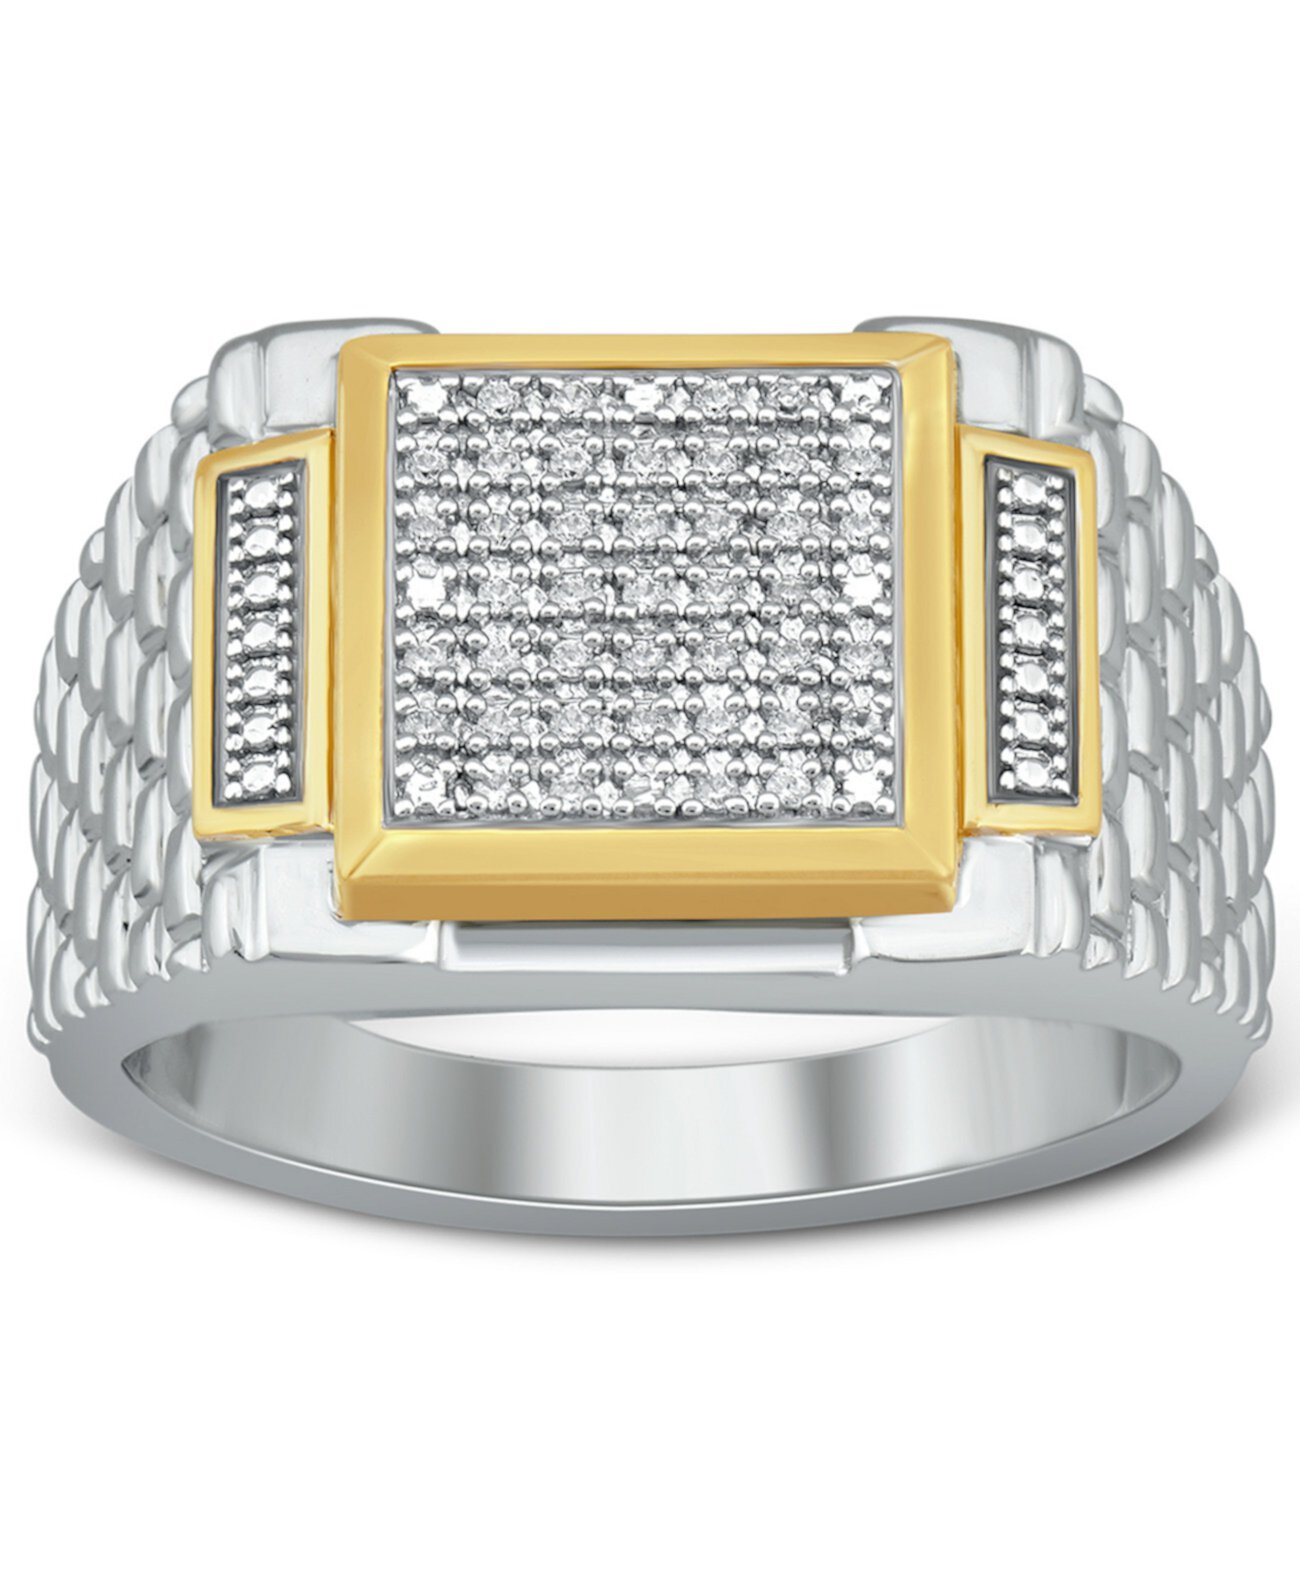 Мужское кольцо с бриллиантами в виде кластера (1/10 карата) из стерлингового серебра и 18-каратного золота Macy's